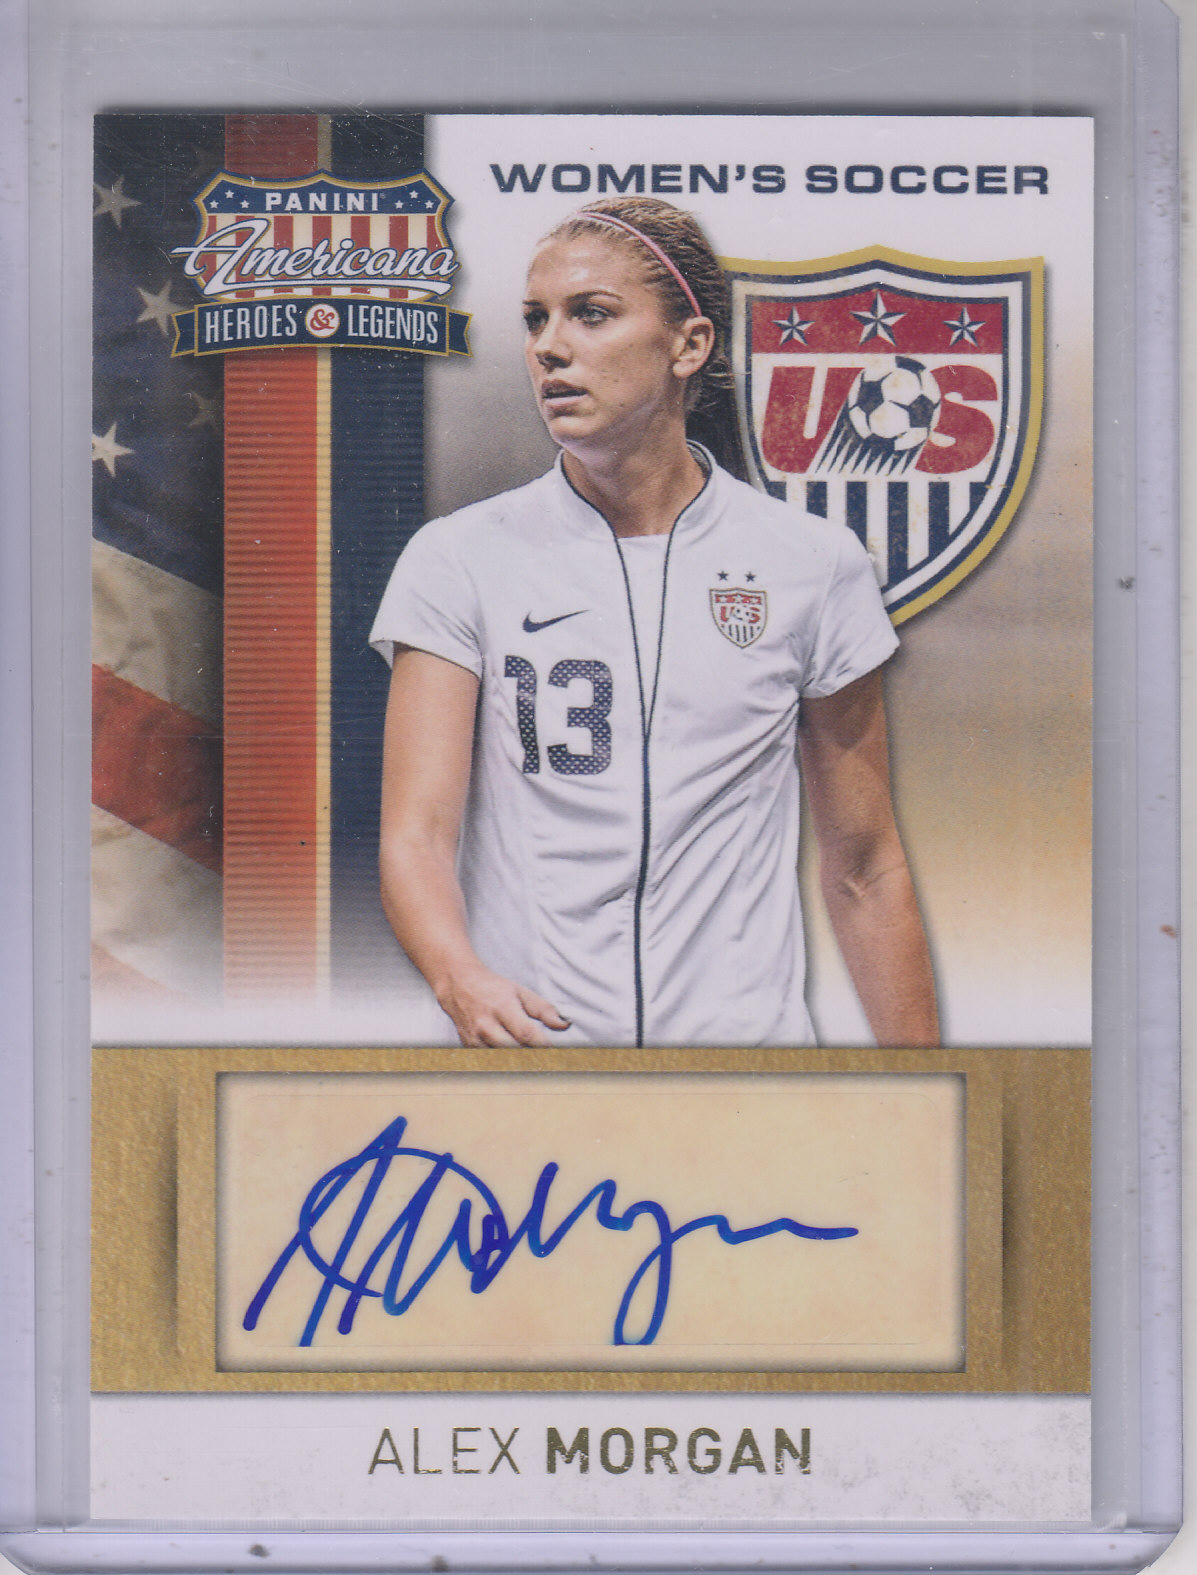 2012 Americana Heroes and Legends US Women's Soccer Autographs #2 Alex Morgan